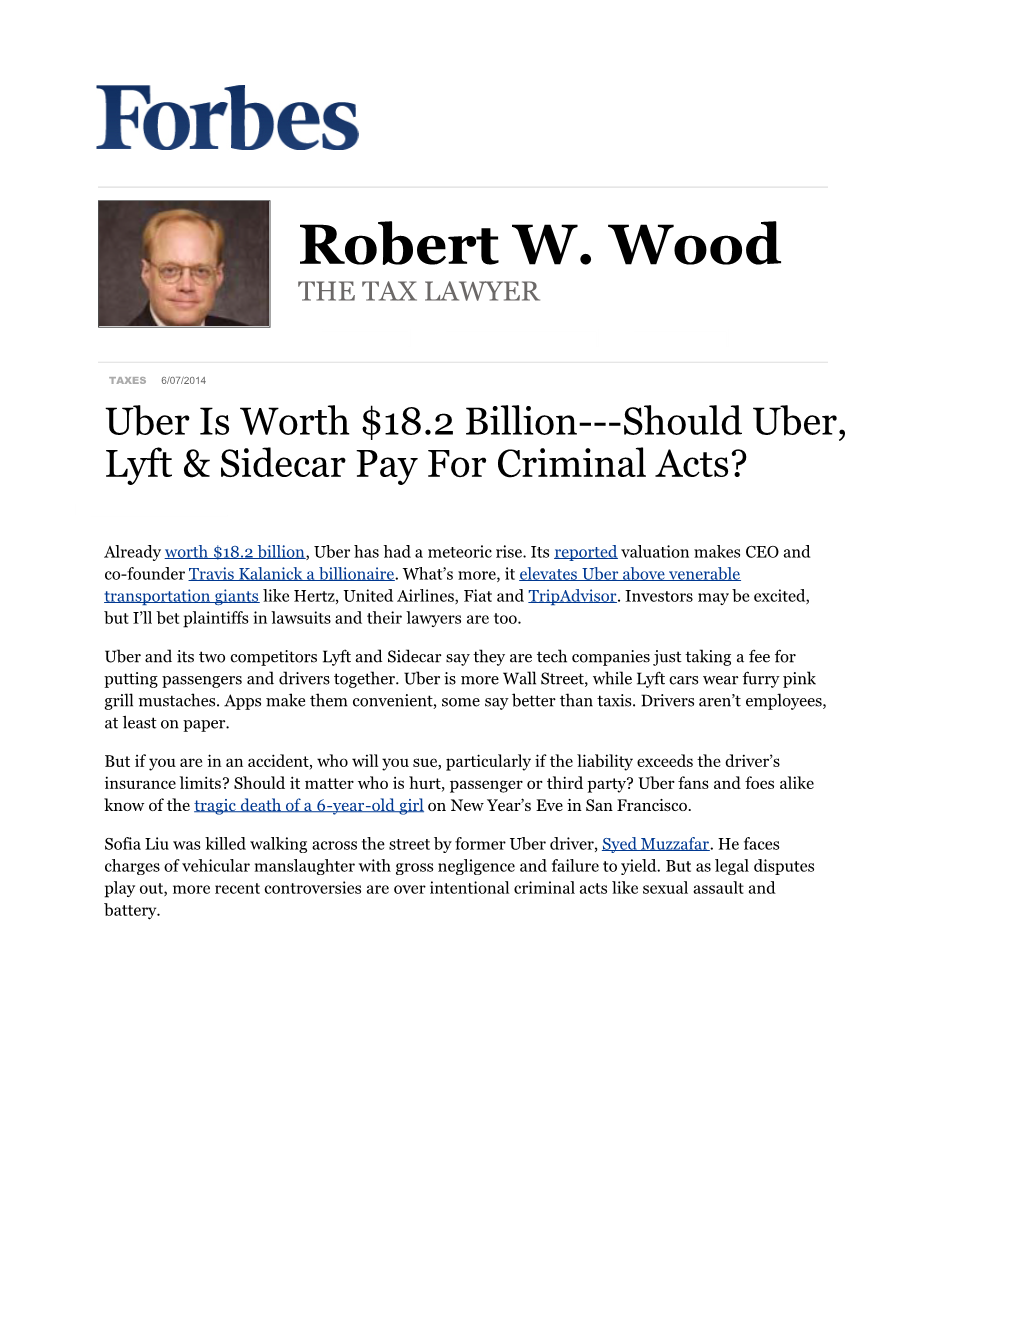 Uber Is Worth $18.2 Billion—Should Uber, Lyft & Sidecar Pay for Criminal Acts?